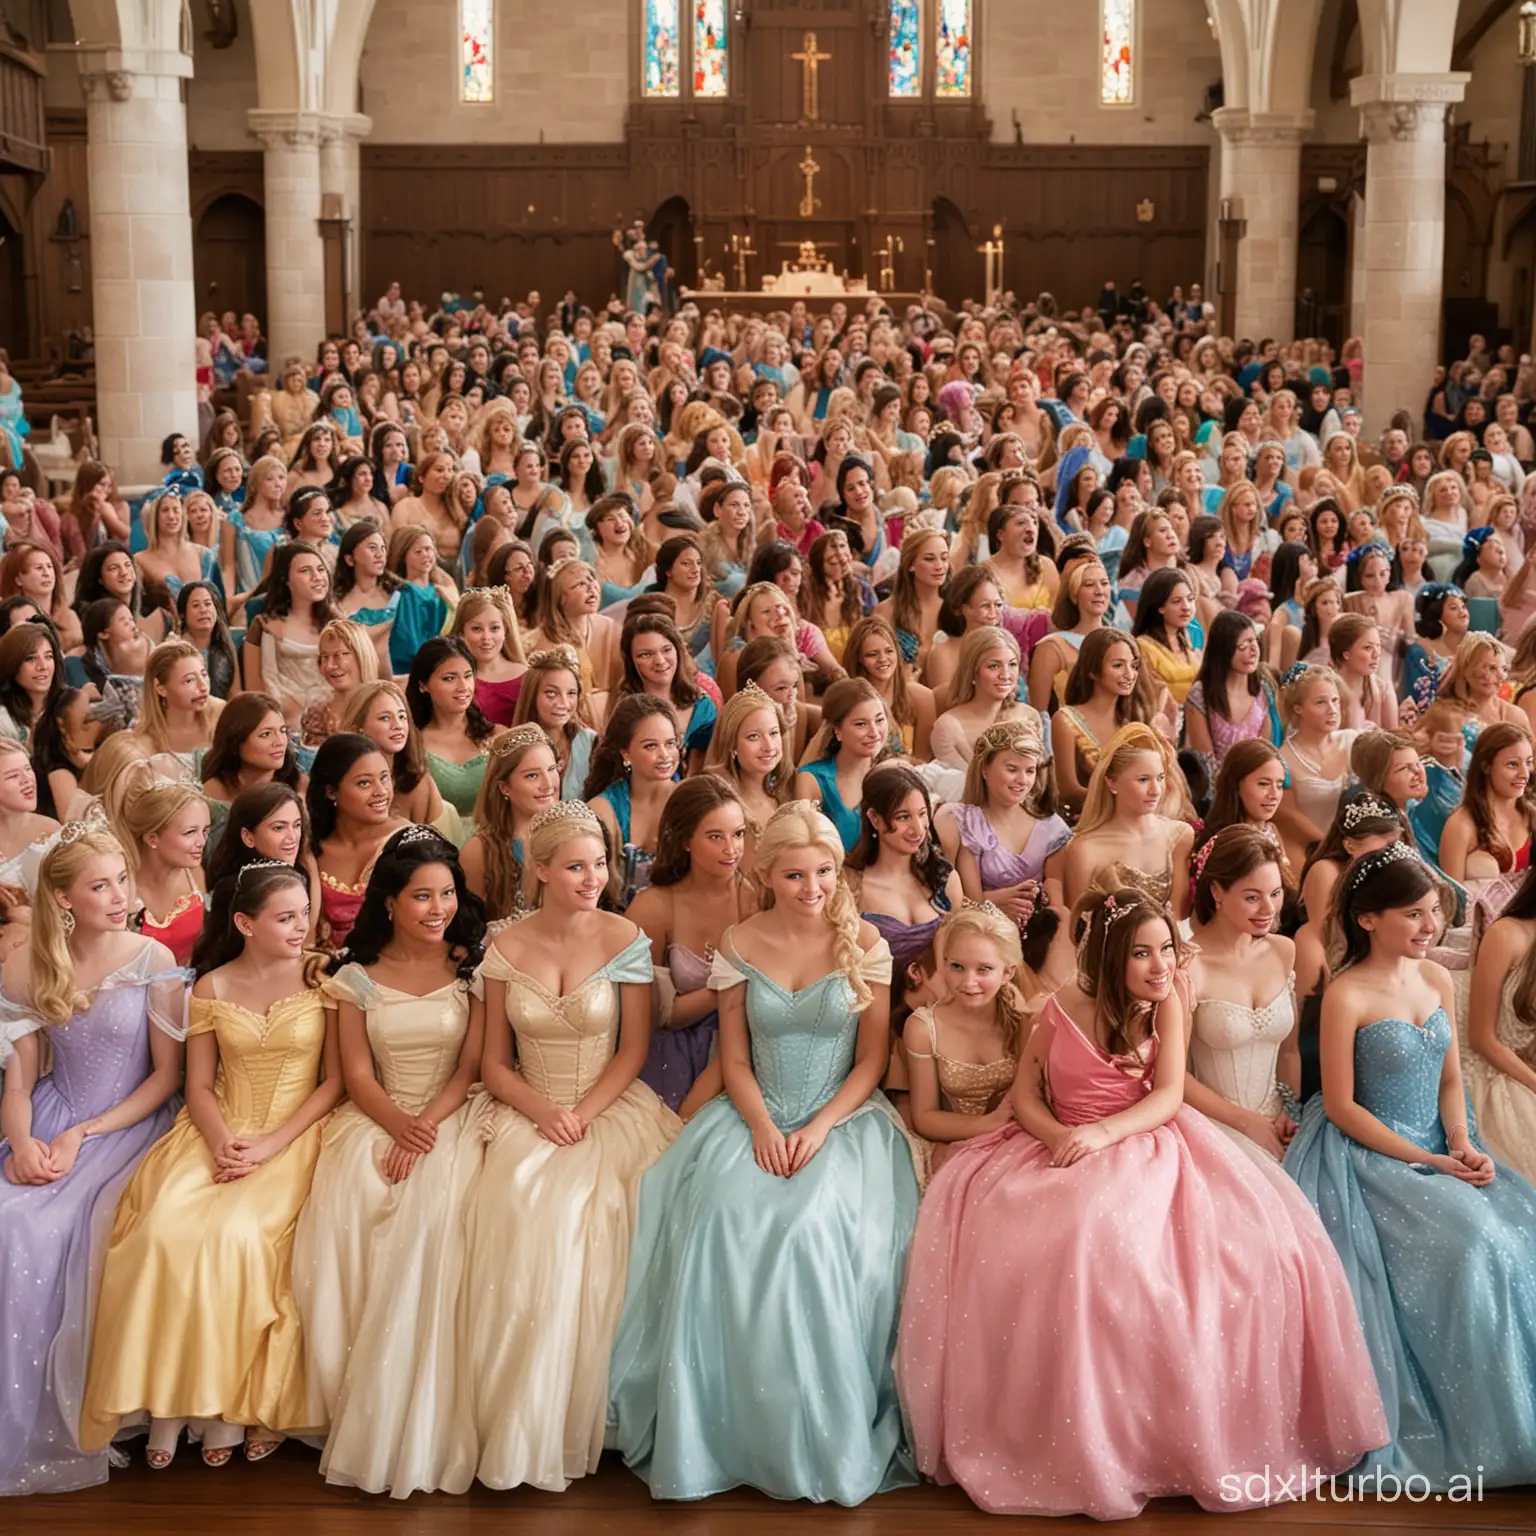 Disney-Princesses-Gathered-in-Church